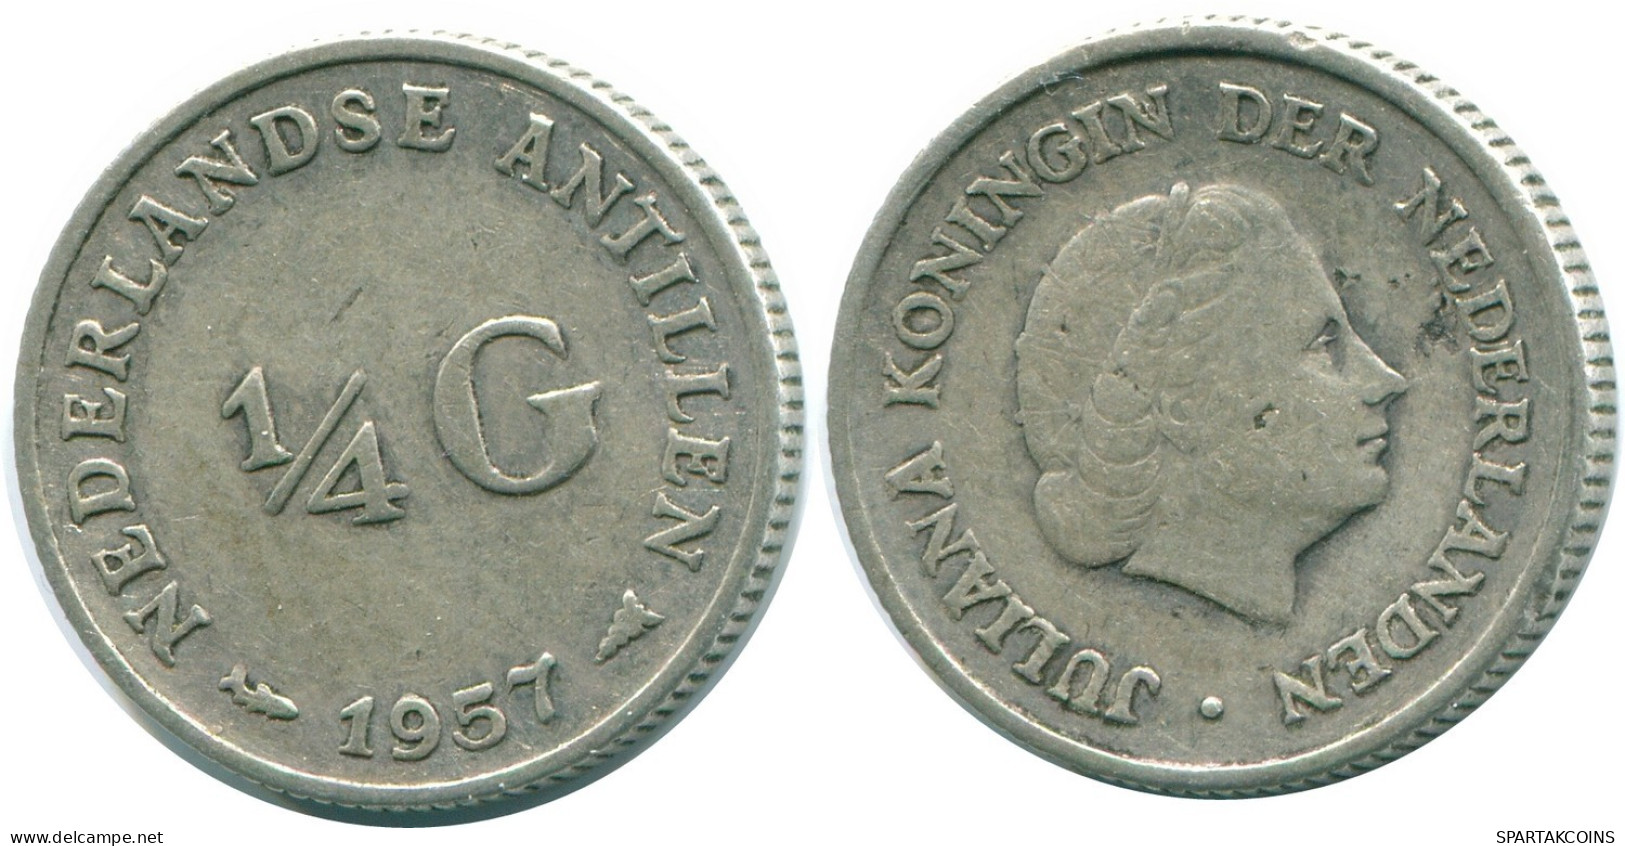 1/4 GULDEN 1957 NETHERLANDS ANTILLES SILVER Colonial Coin #NL10984.4.U.A - Netherlands Antilles